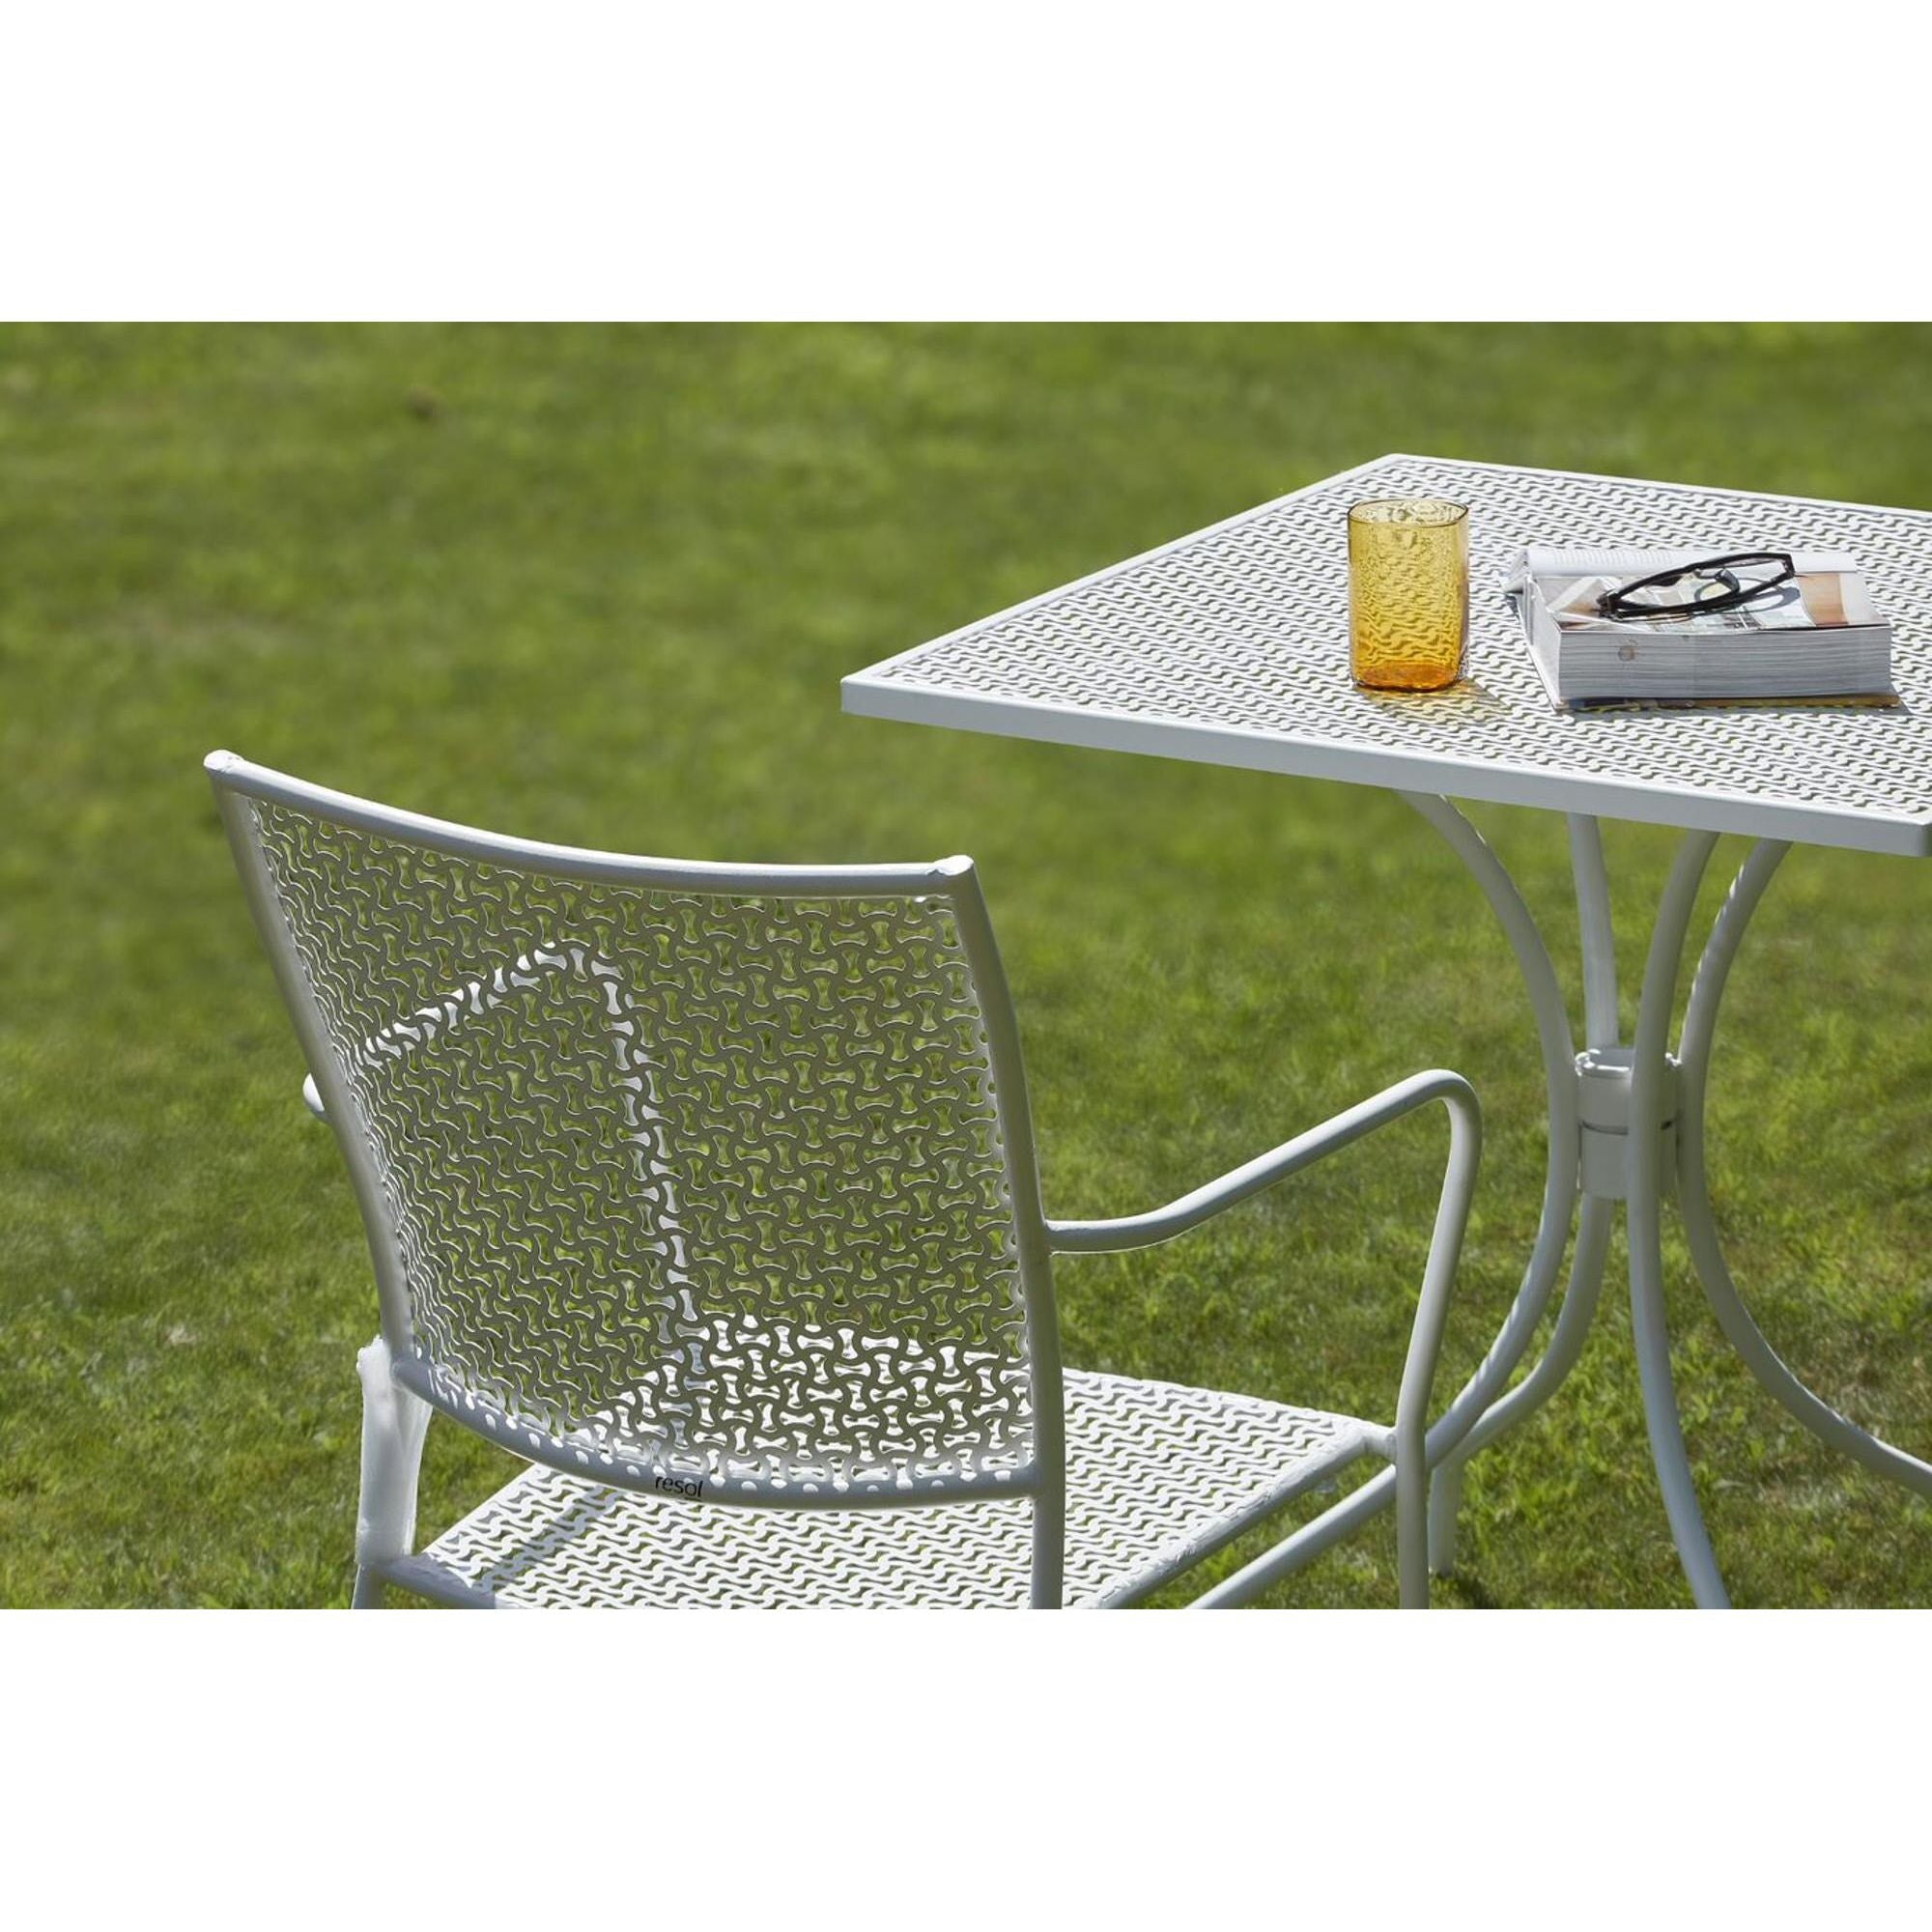 Garbar Egeo Square Table Outdoor 70x70 White